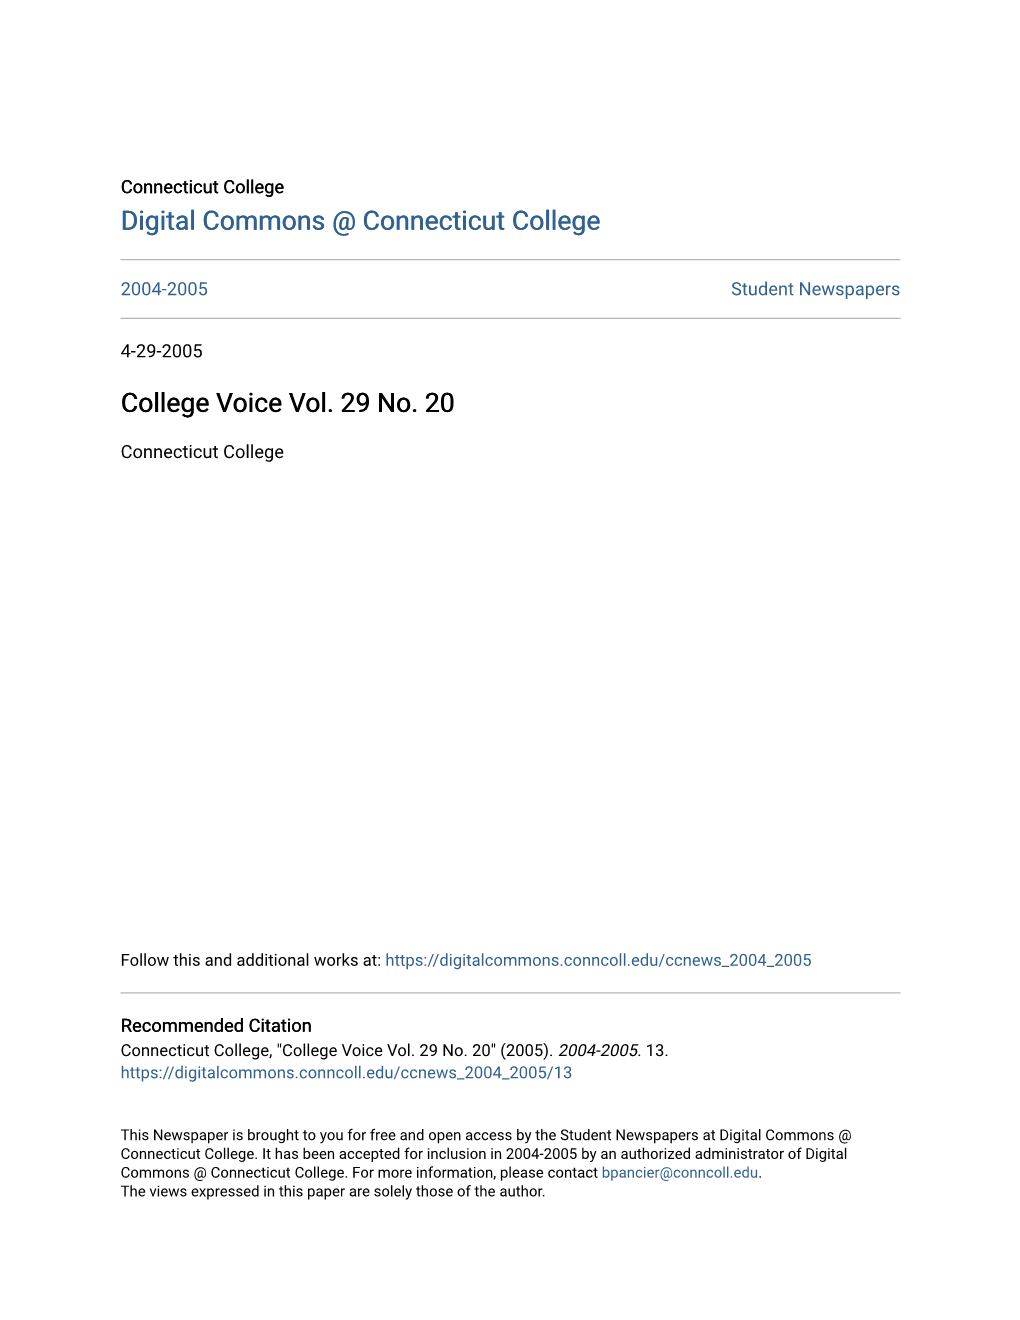 College Voice Vol. 29 No. 20